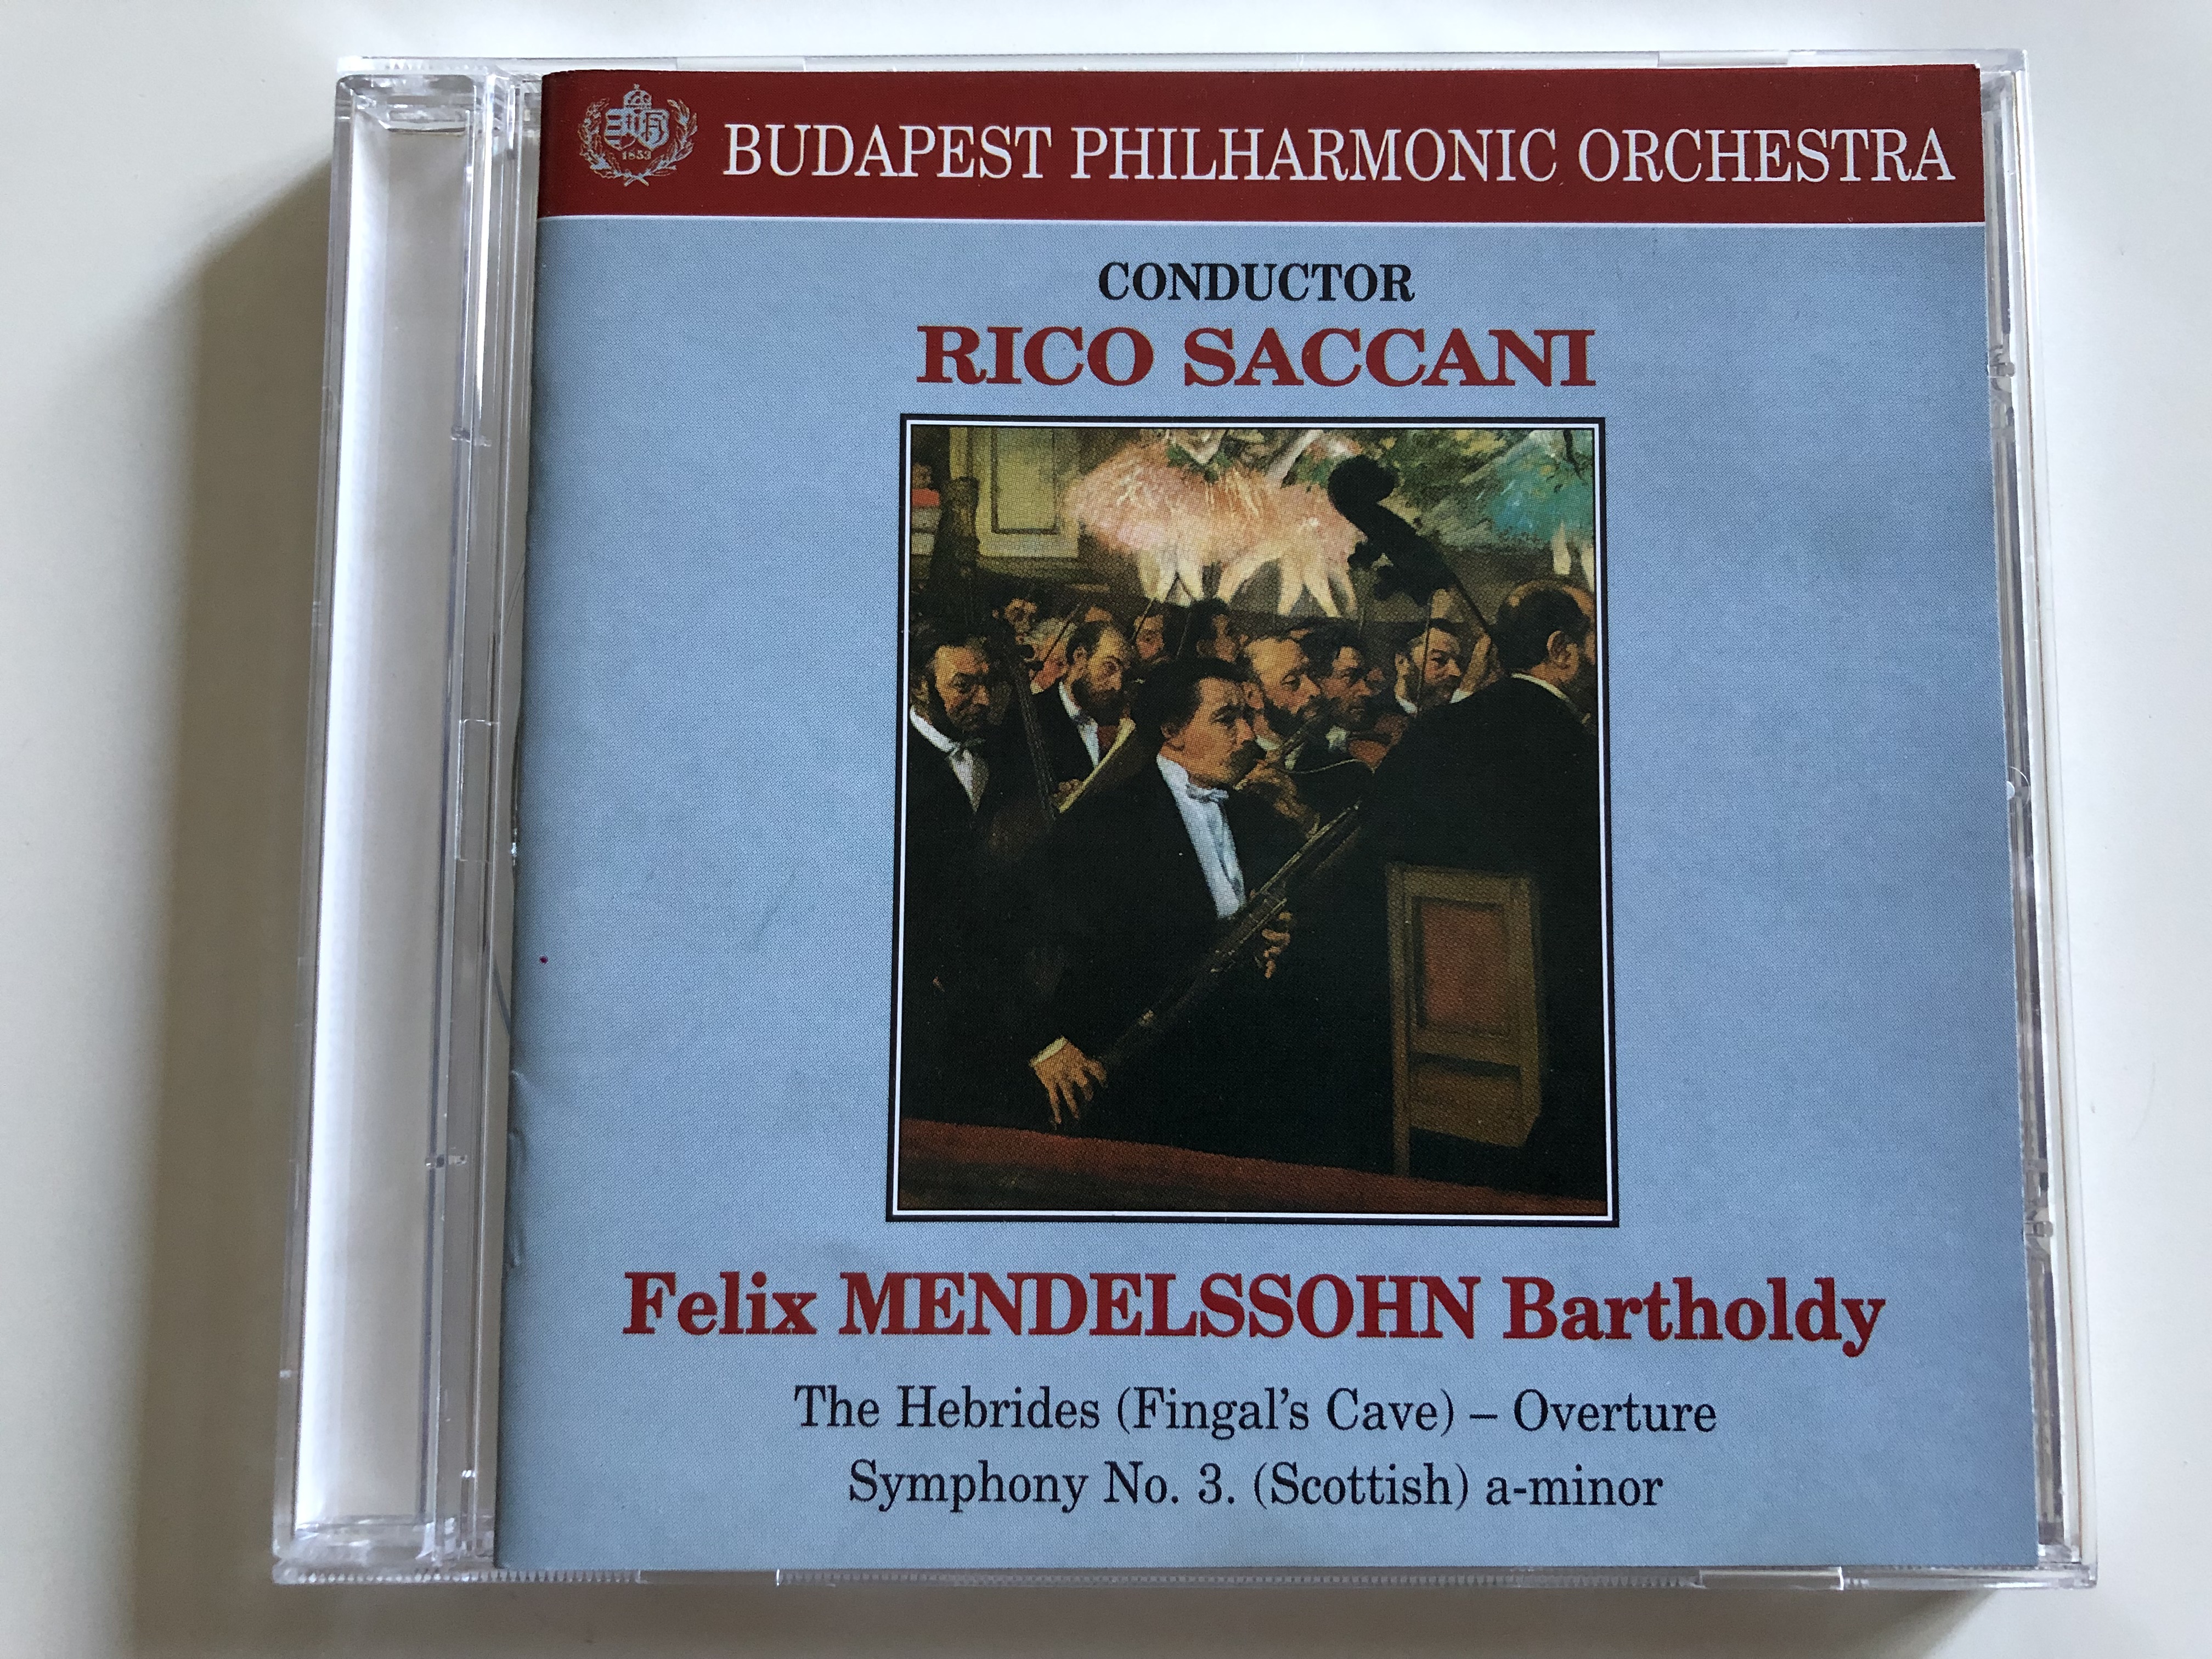 budapest-philharmonic-orchestra-conducted-rico-saccani-felix-mendelssohn-bartholdy-the-hebrides-fingal-s-cave-overture-symphony-no.3-scottish-a-minor-vtcd-audio-cd-1998-bftz-003-1-.jpg